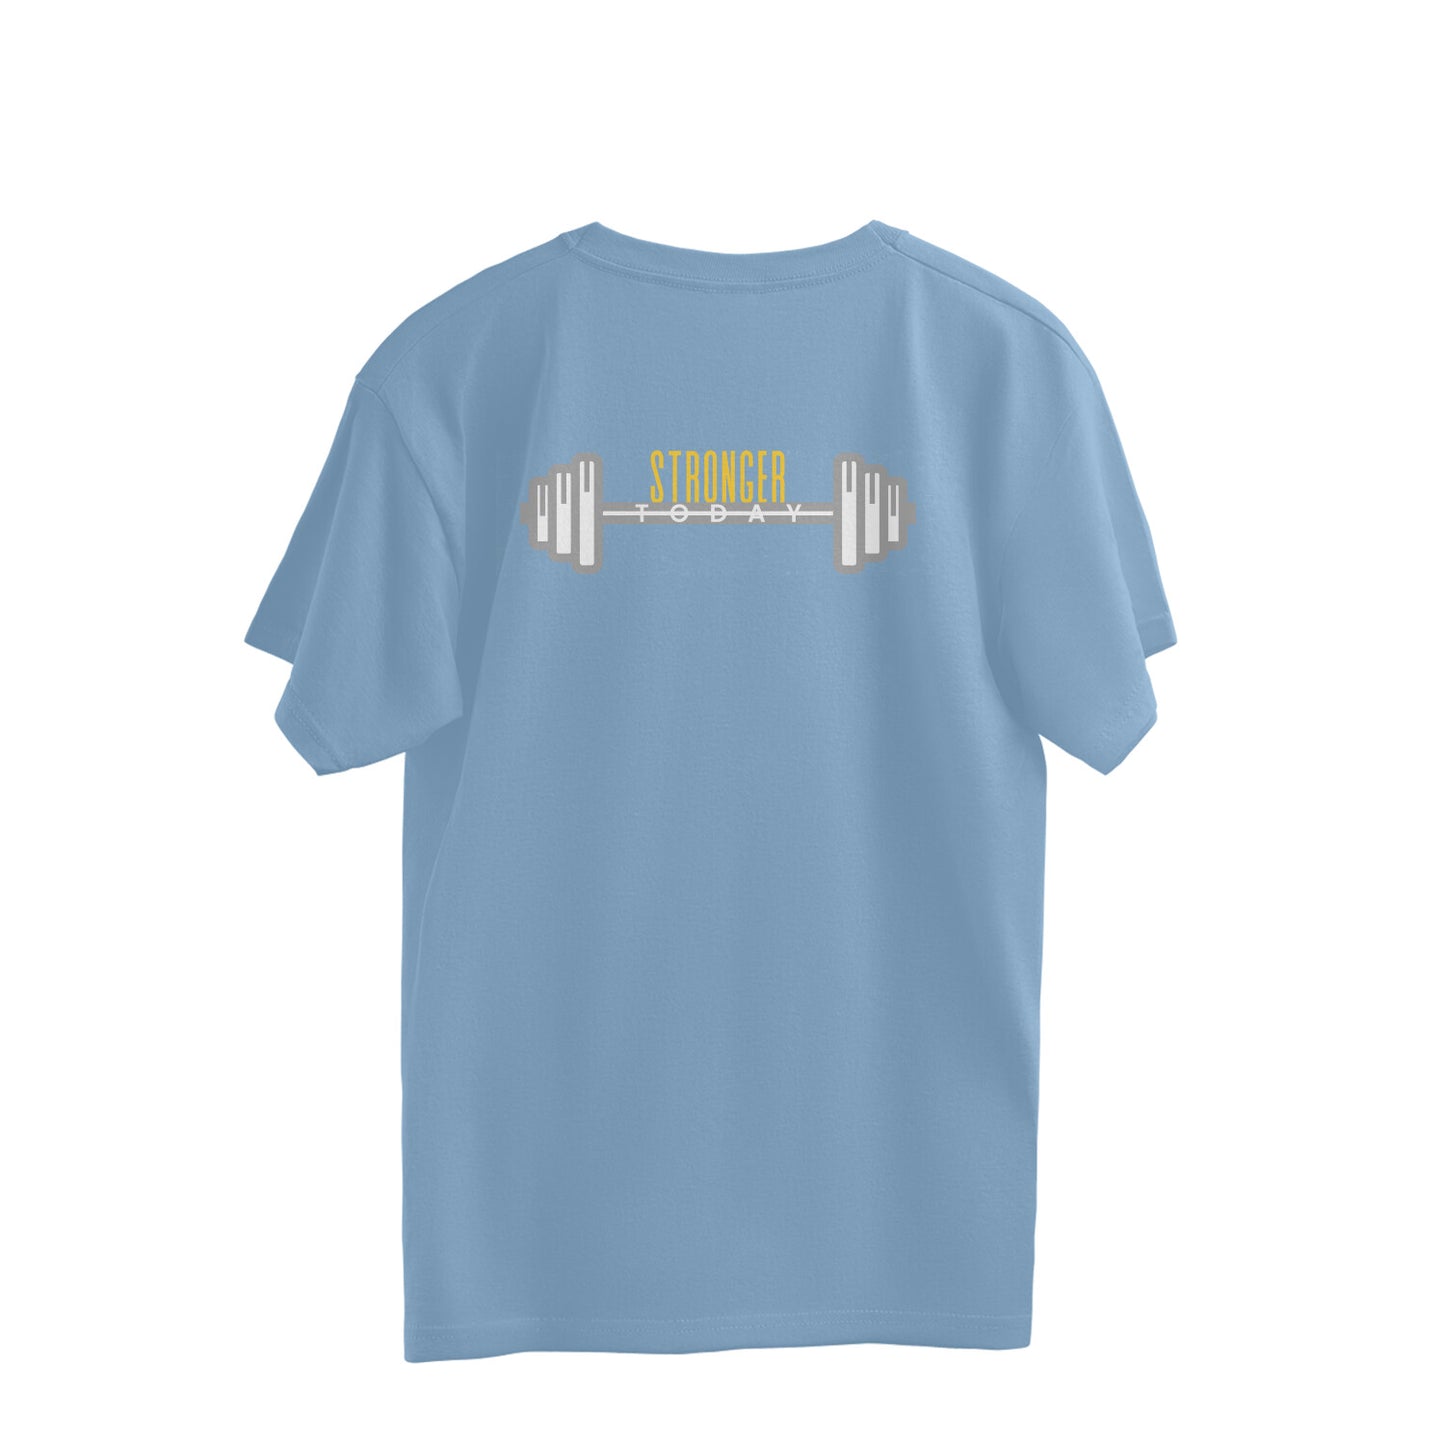 Stronger Today - Oversized Unisex T-shirt